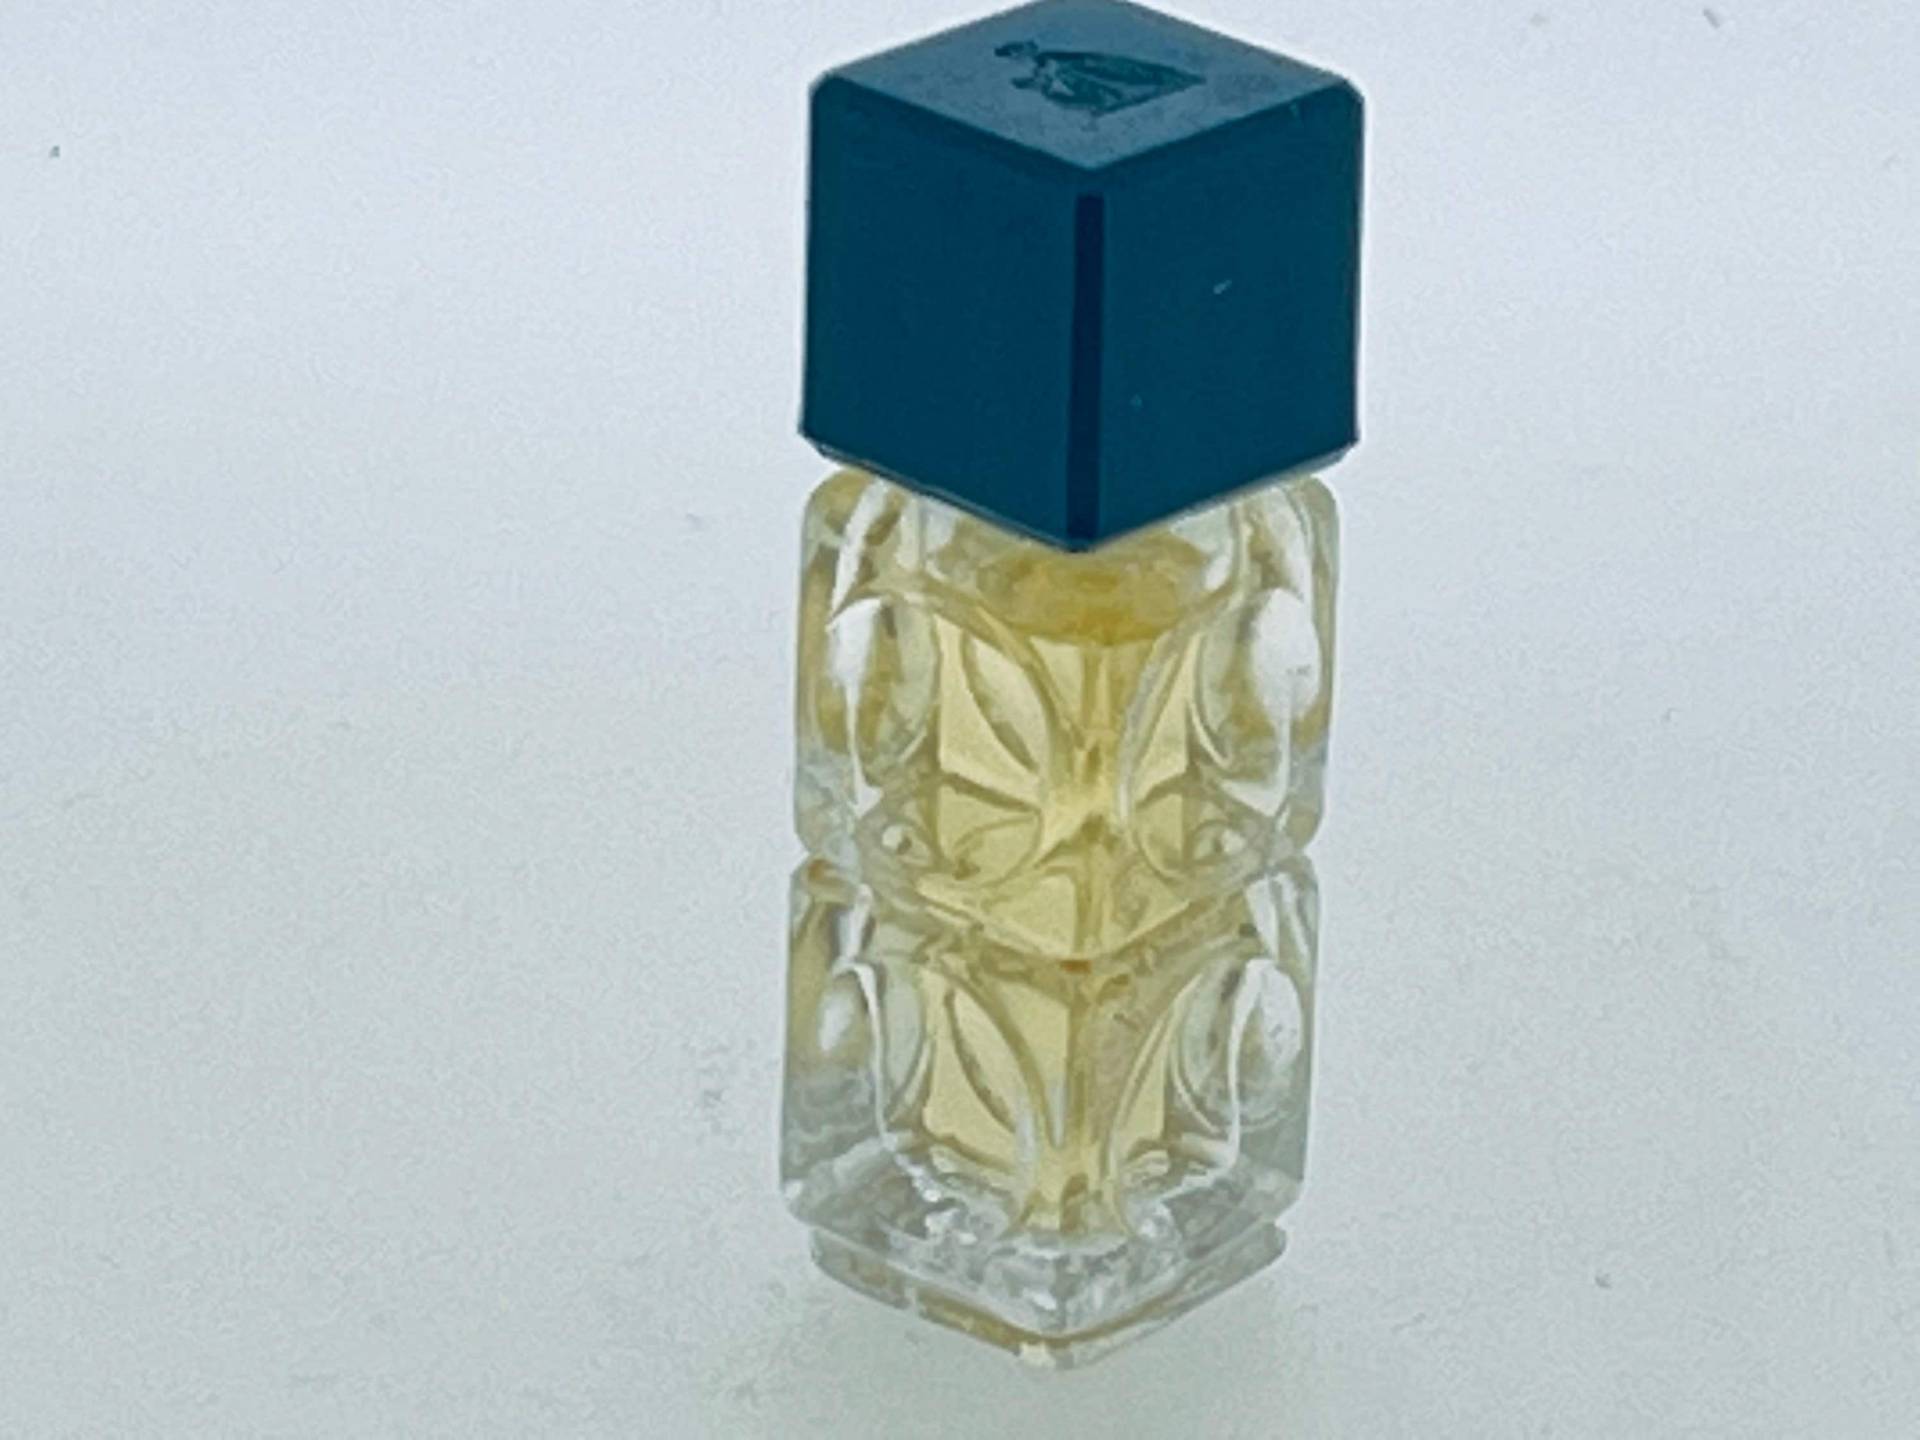 Via Lanvin, Lanvin 1971 Parfum Miniature 2 Ml von Etsy - VintagGlamour